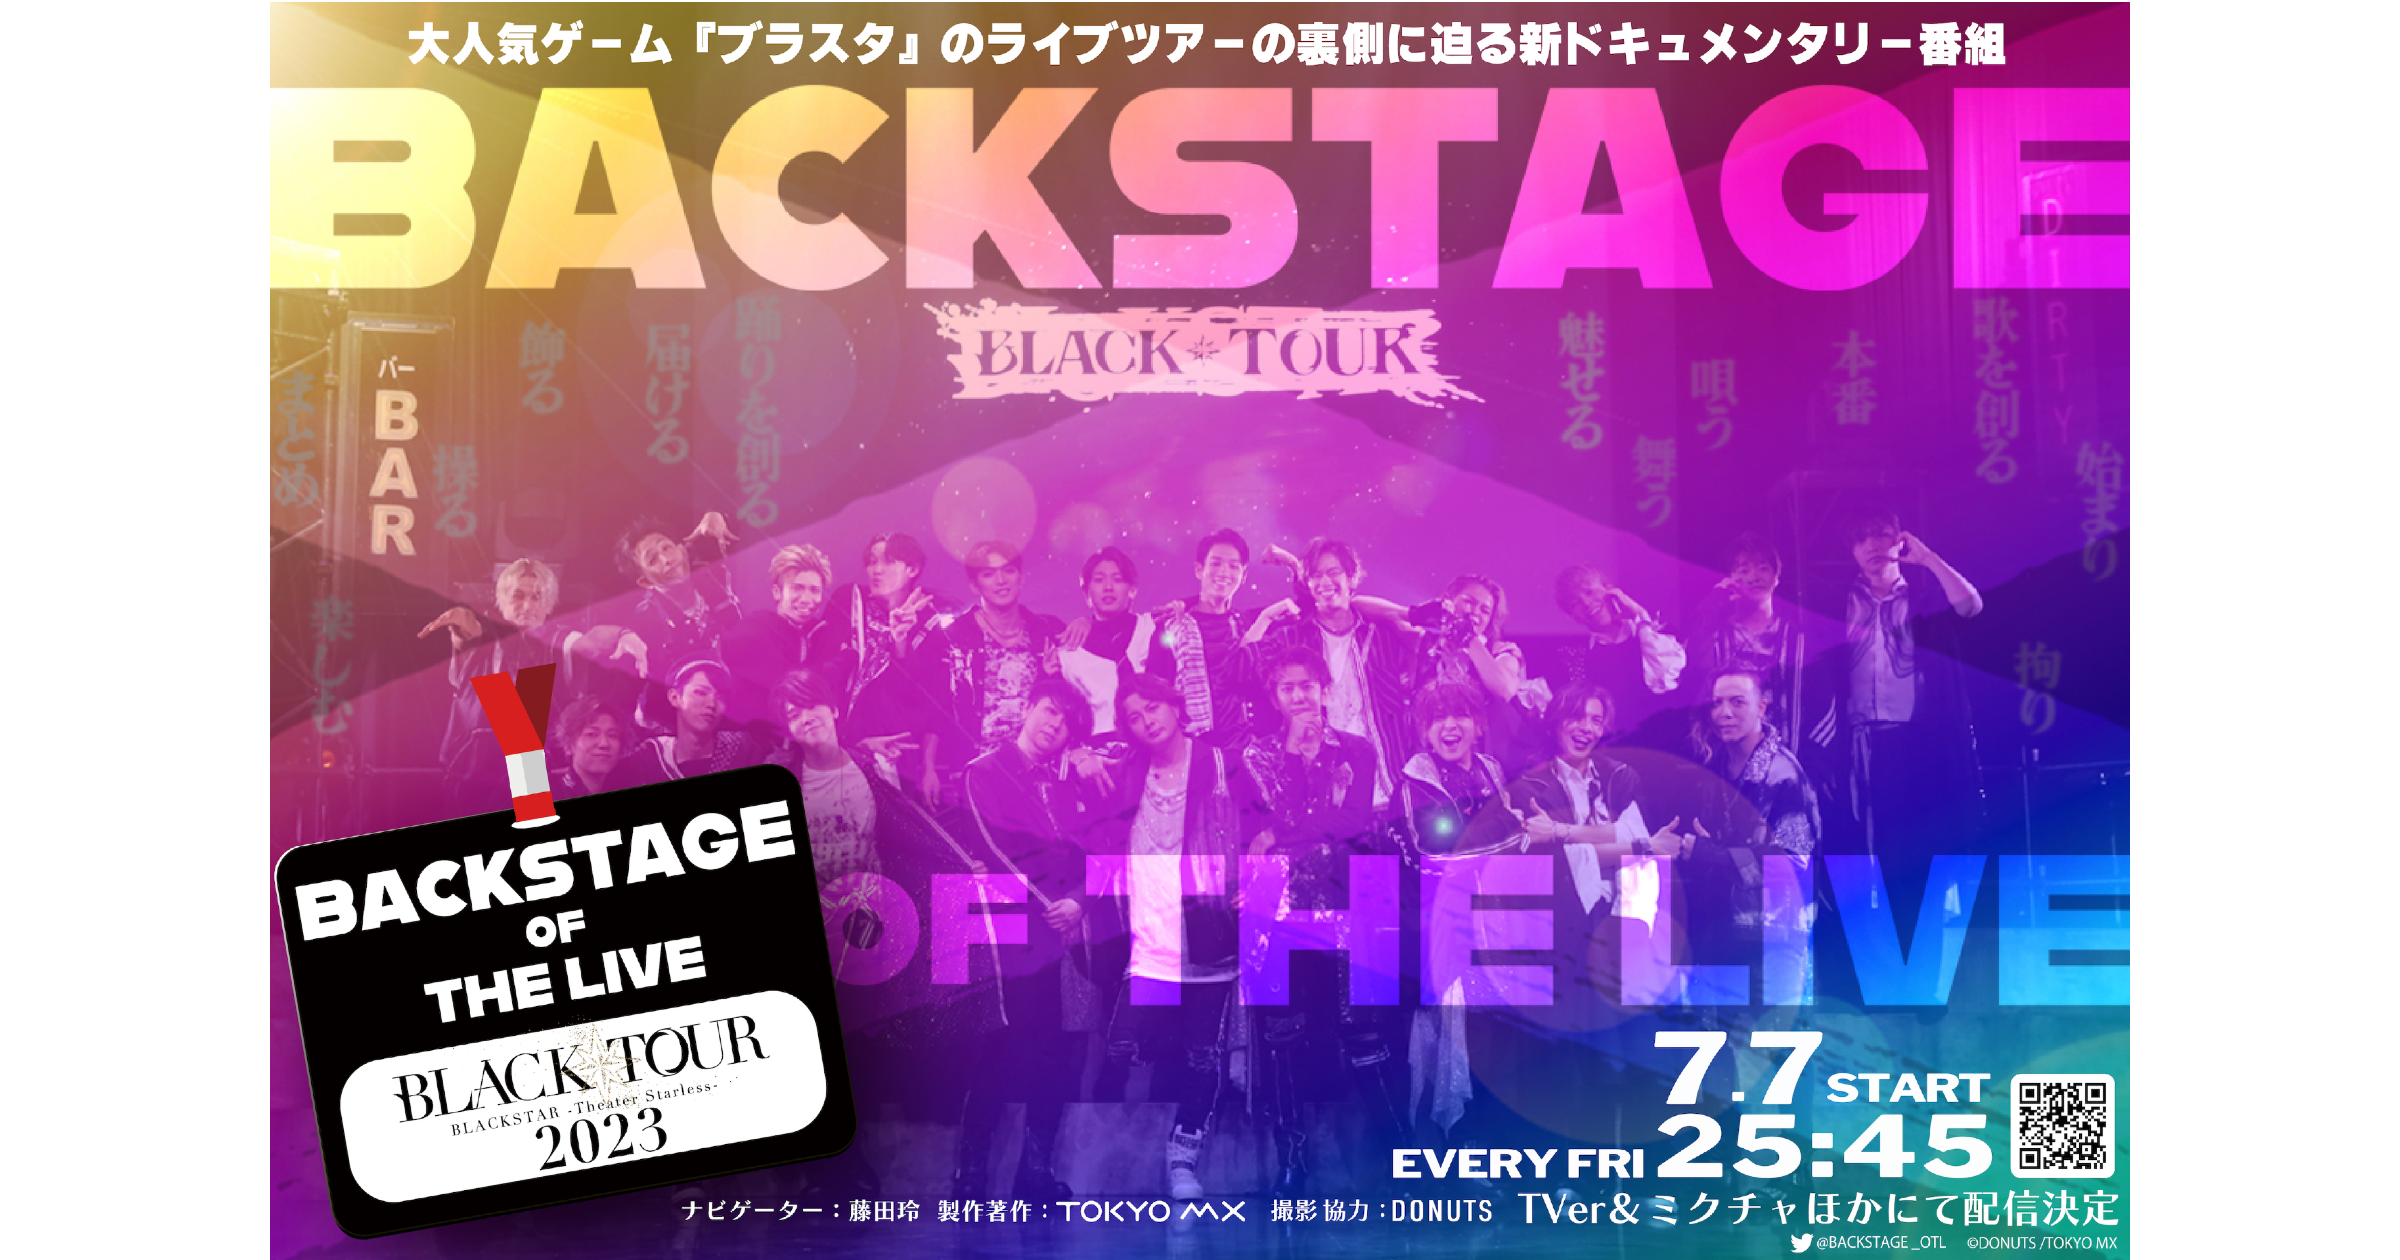 TOKYO MX新ドキュメンタリー番組「BACKSTAGE OF THE LIVE」がDONUTSの人気スマホゲーム『ブラスタ』のライブツアーを密着取材！7月7日(金)より毎週金曜25:45放送開始！